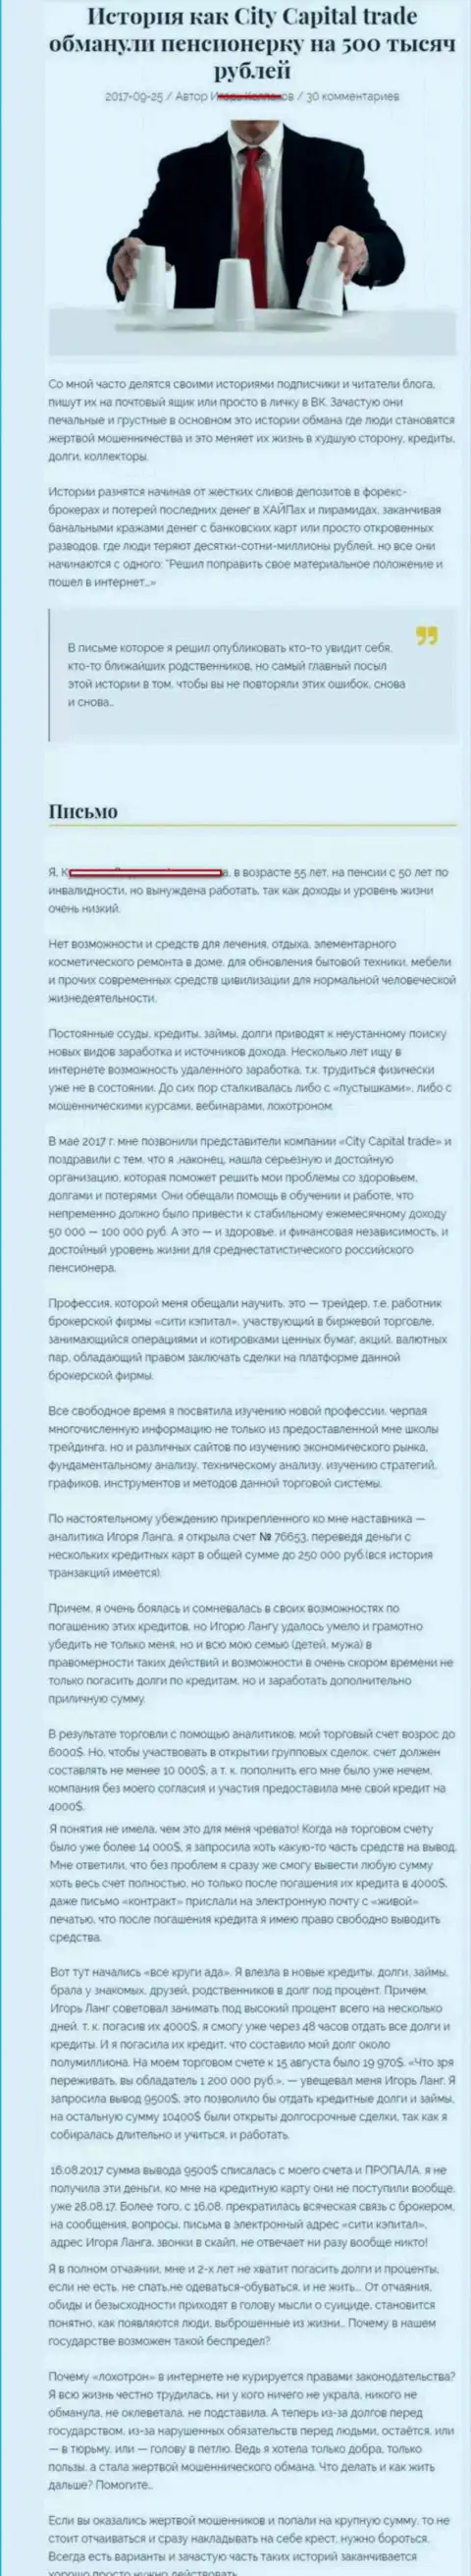 СитиКапитал Трейд обворовали клиентку пенсионного возраста - инвалида на пятьсот тысяч рублей - ШУЛЕРА !!!